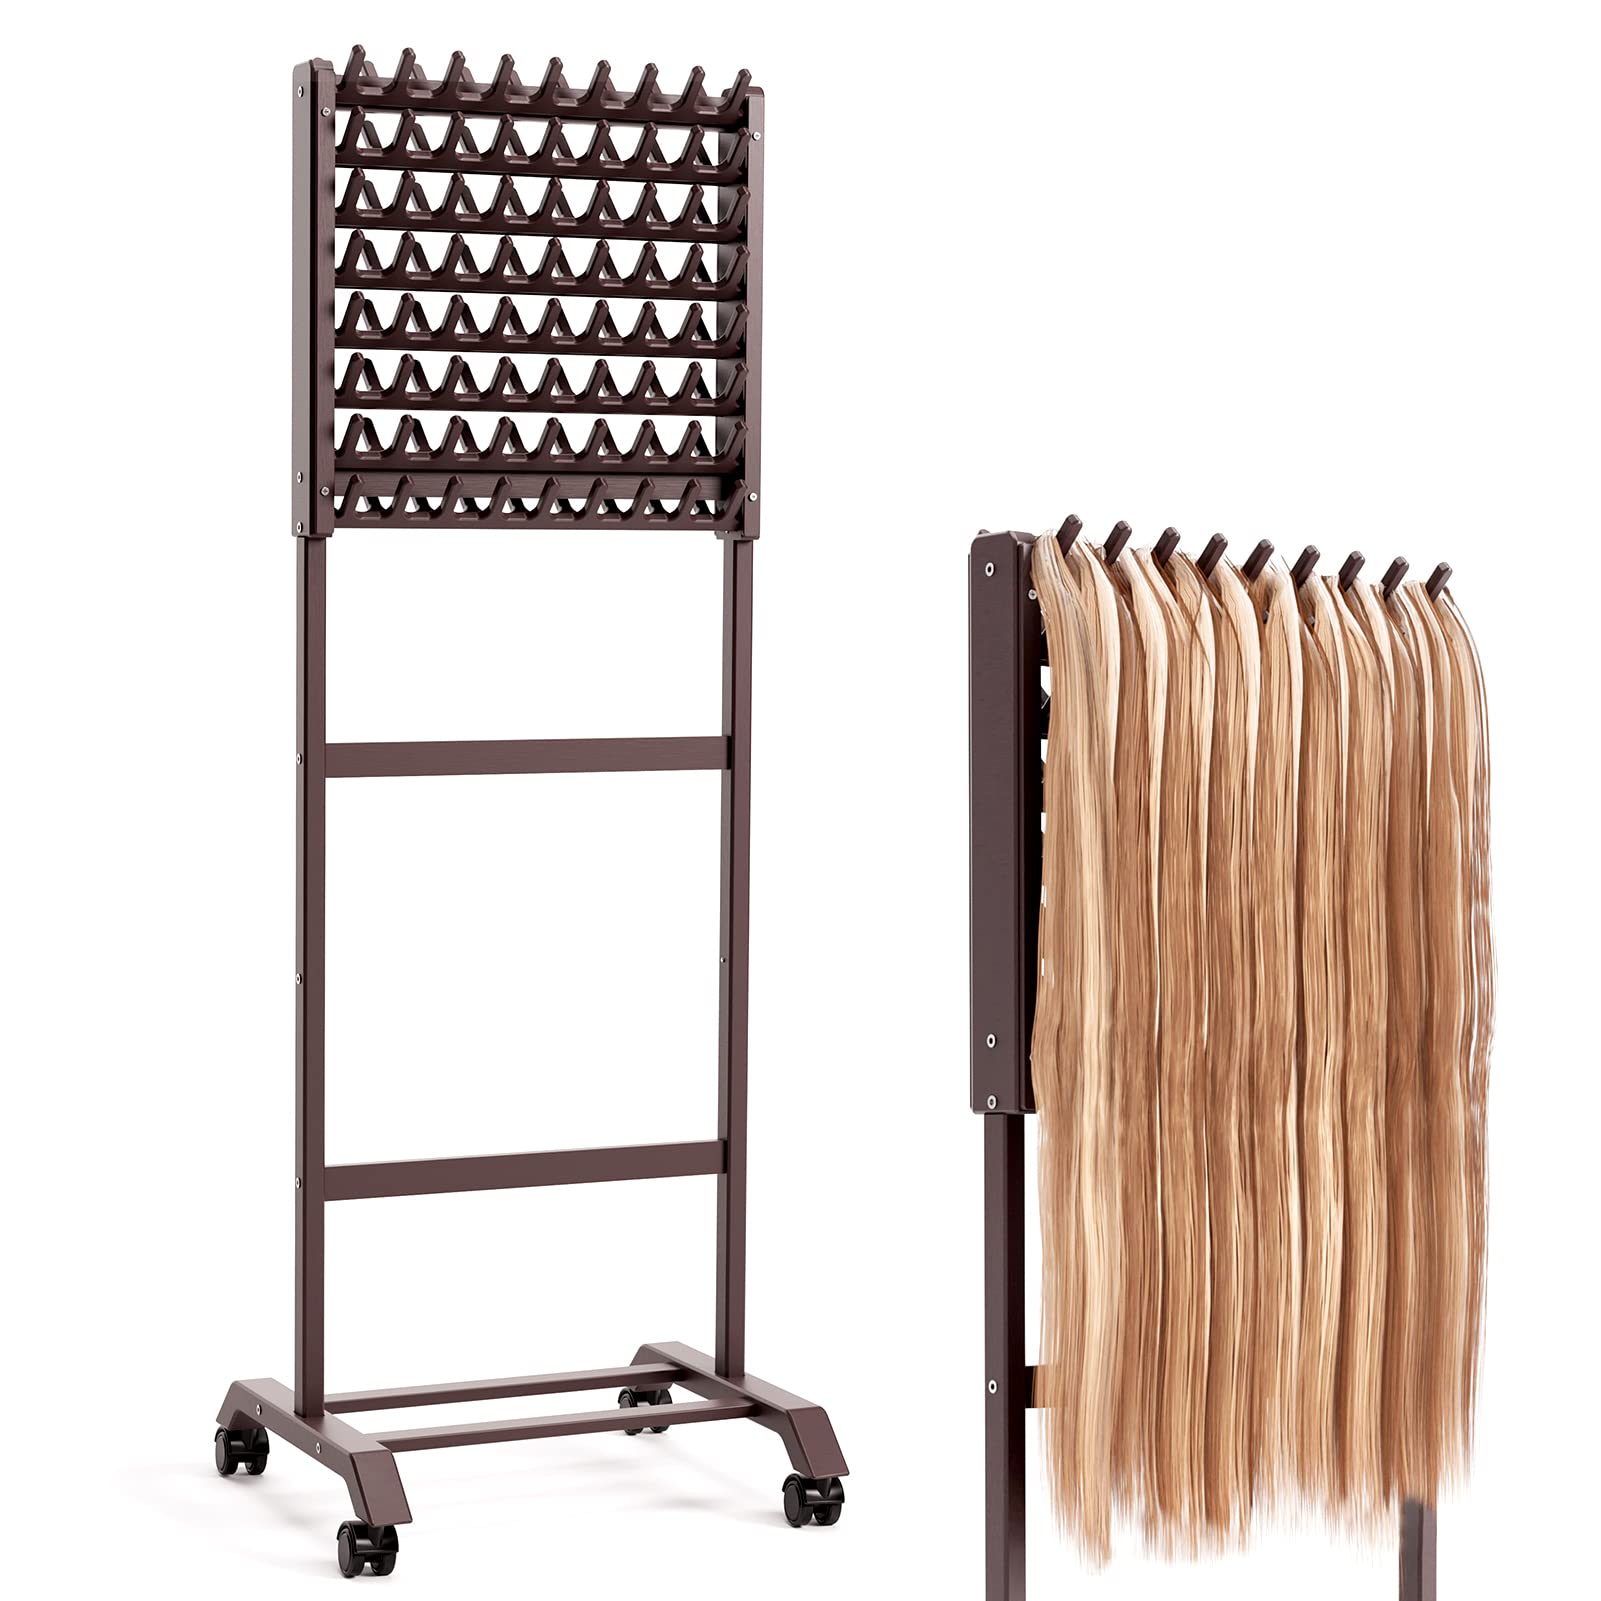 Yumkfoi Braiding Hair Rack with Sawtooth Pegs 144 Pegs Wooden Hair